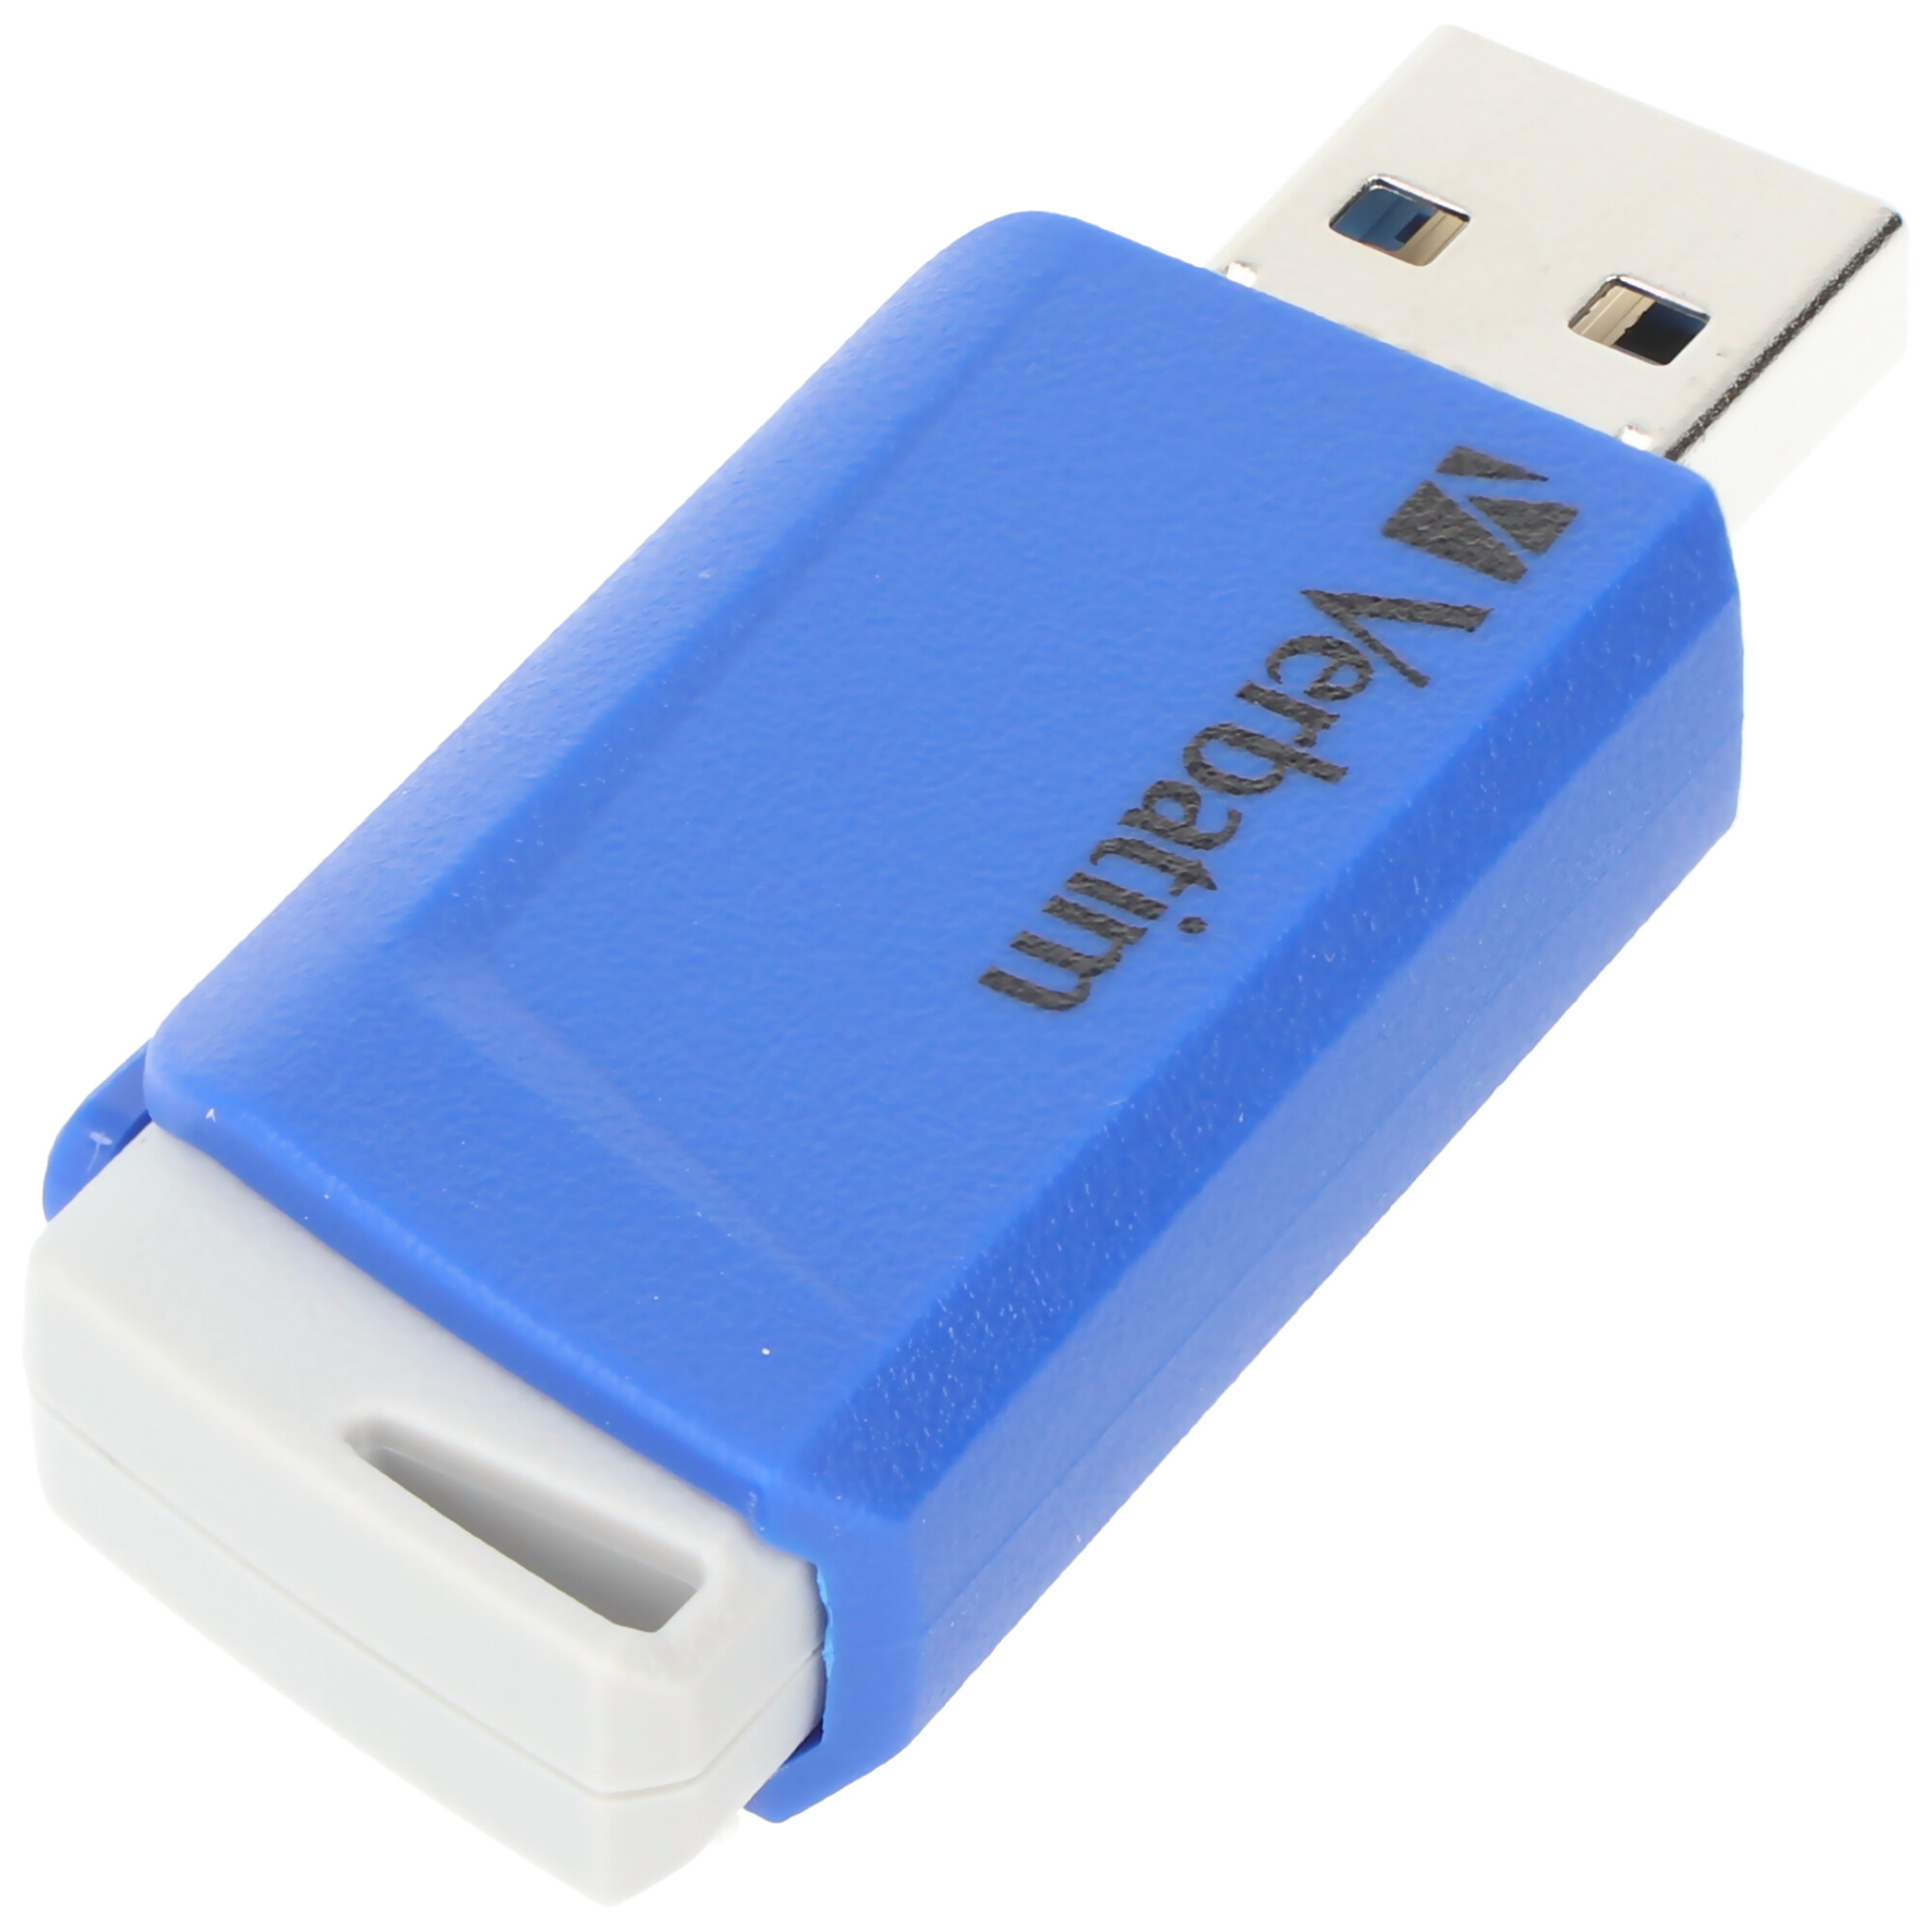 Verbatim USB 3.2 Stick 16GB, Store'n'Click, rot-blau-gelb Typ-A, (R) 80MB/s, (W) 25MB/s, Retail-Blister (3-Pack)